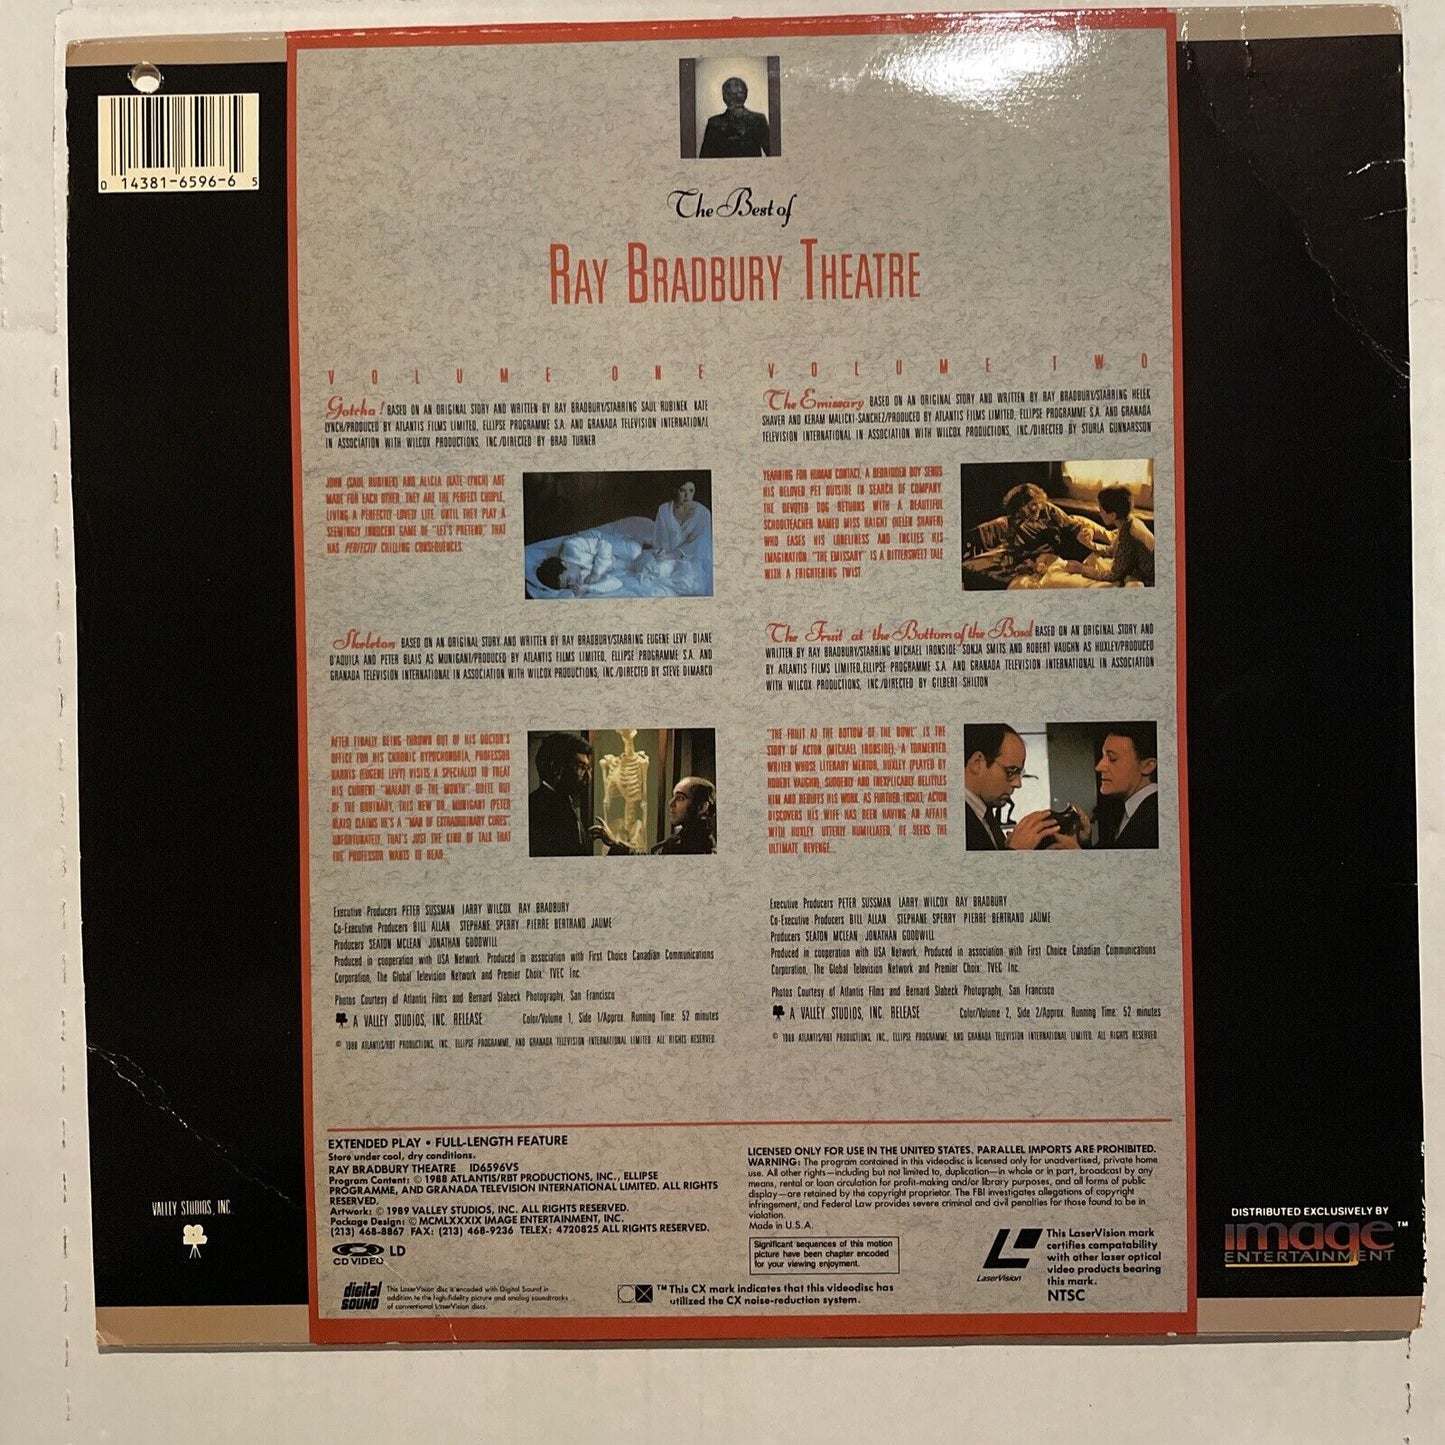 Best of Ray Bradbury Theater, The Vol 2 Laserdisc LD